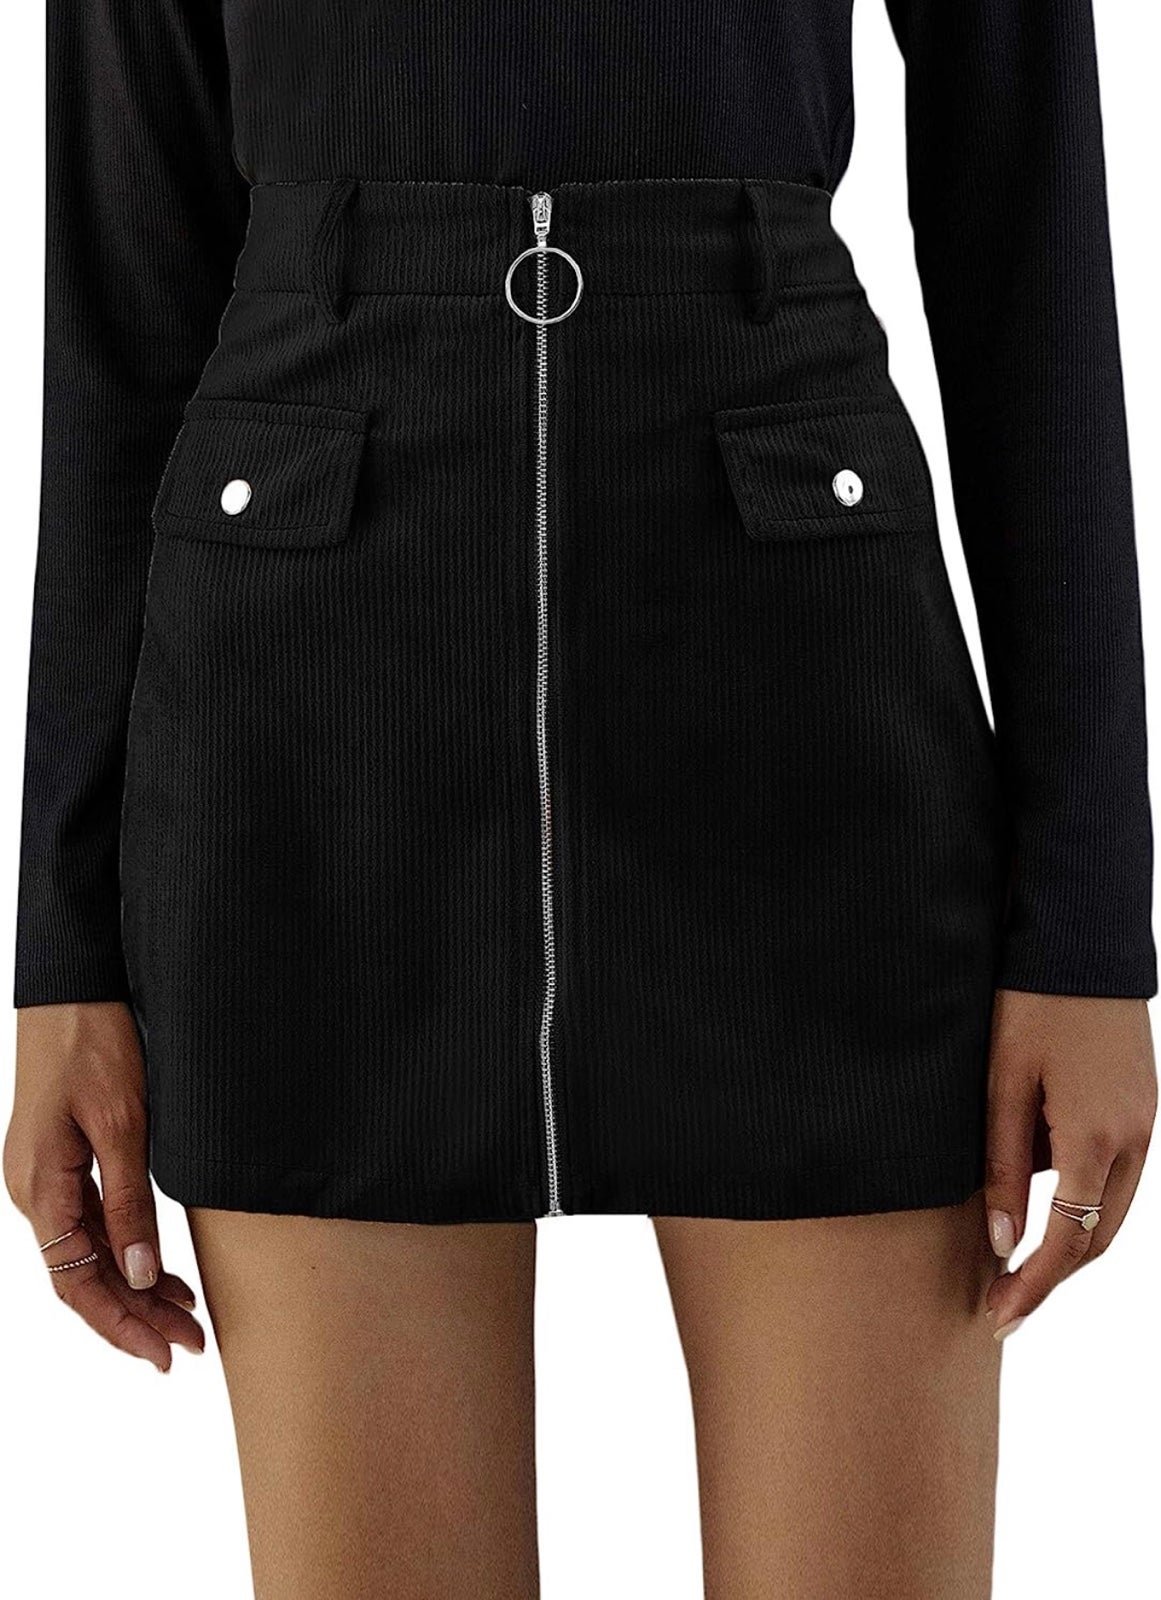 Special offer  Black corduroy skirt - large fHaEQK5fZ C